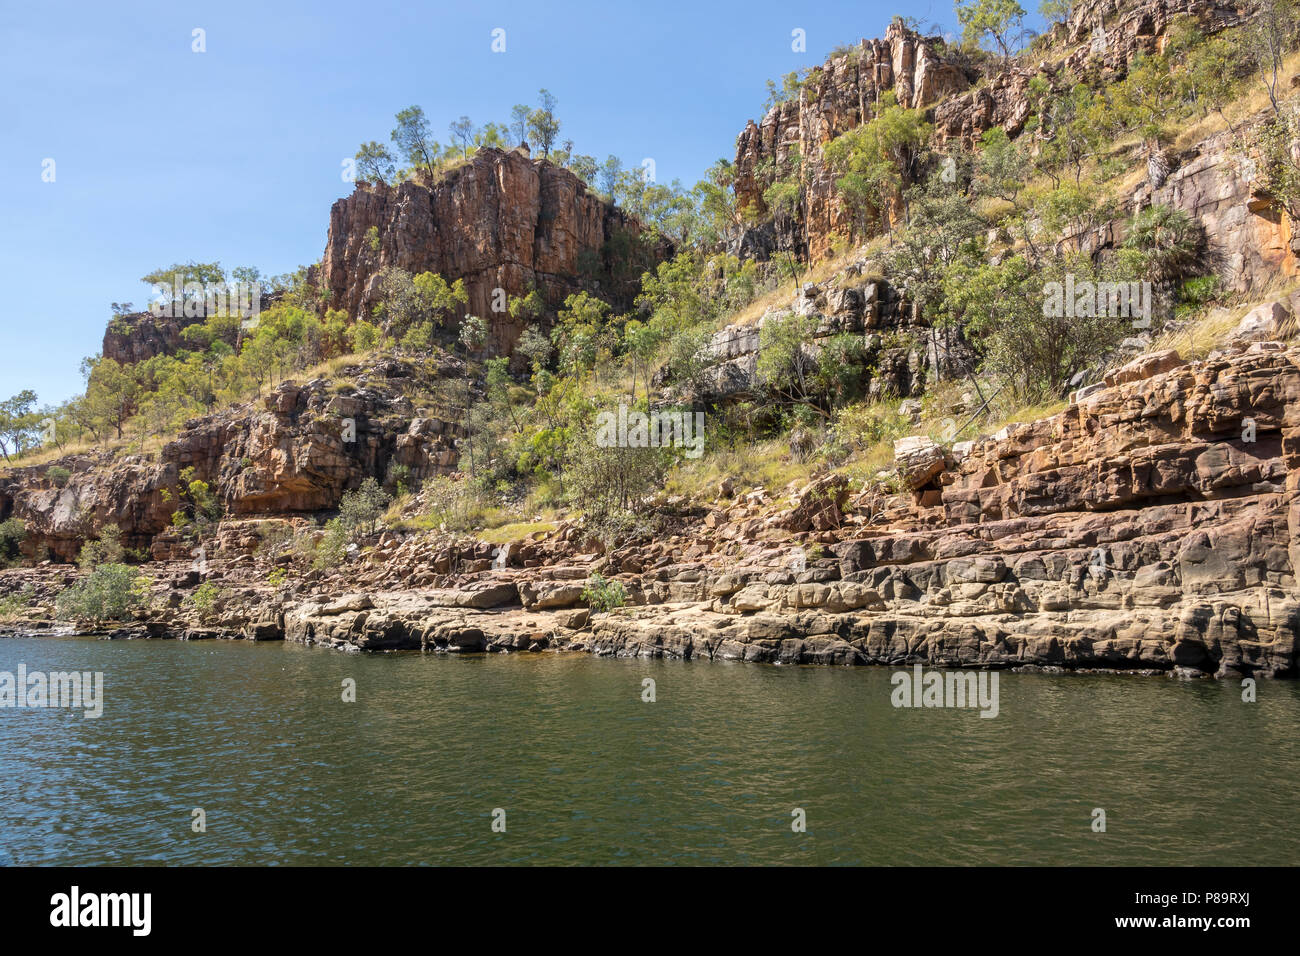 Boat cruise in Nitmiluk Gorge, Northern Territory, Australia Stock Photo